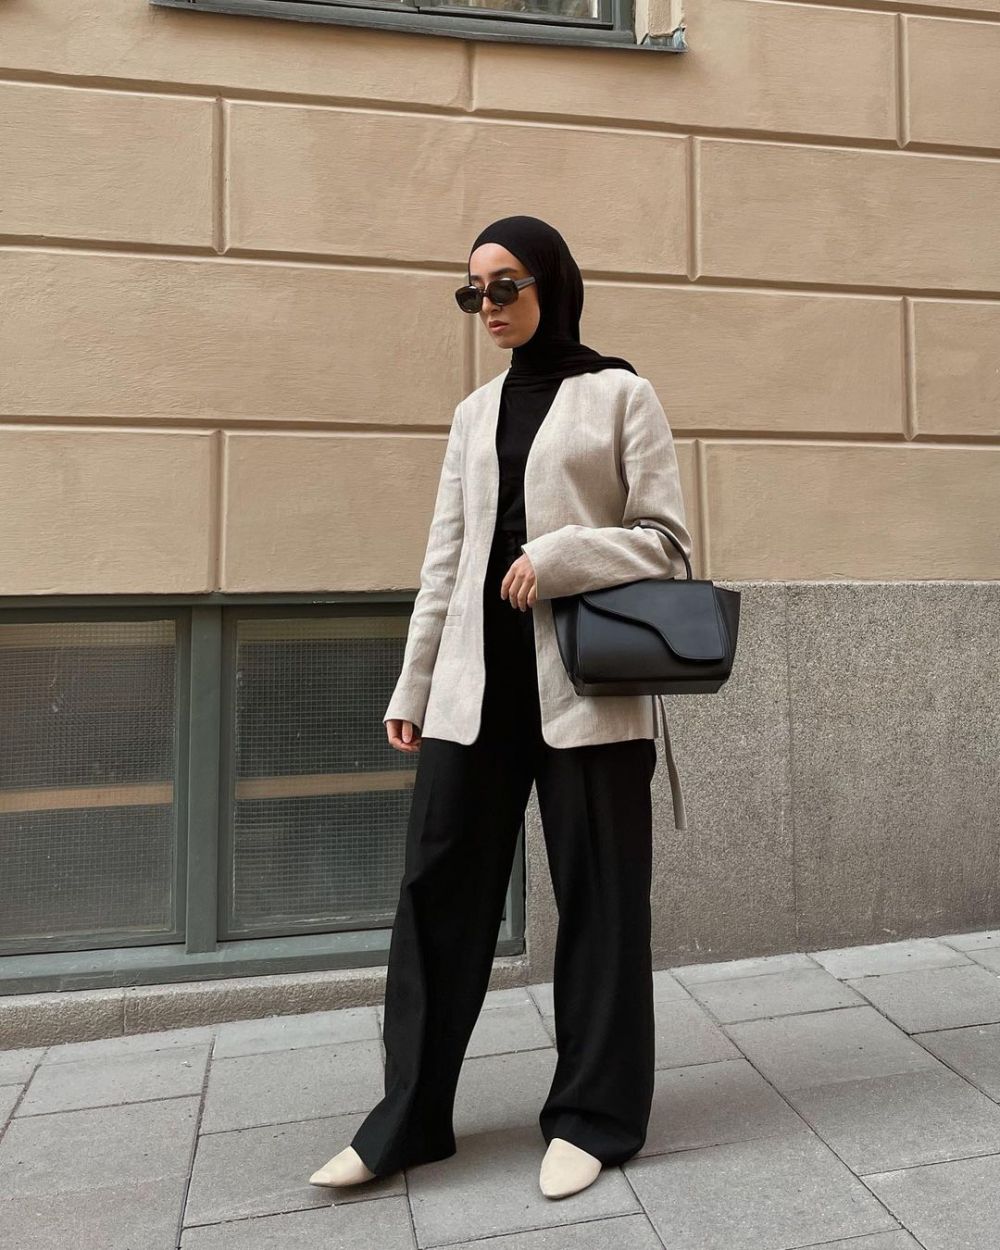 14 Ide Outfit Hijab untuk Ngantor Ala Selebgram Imane Asry, Stylish!